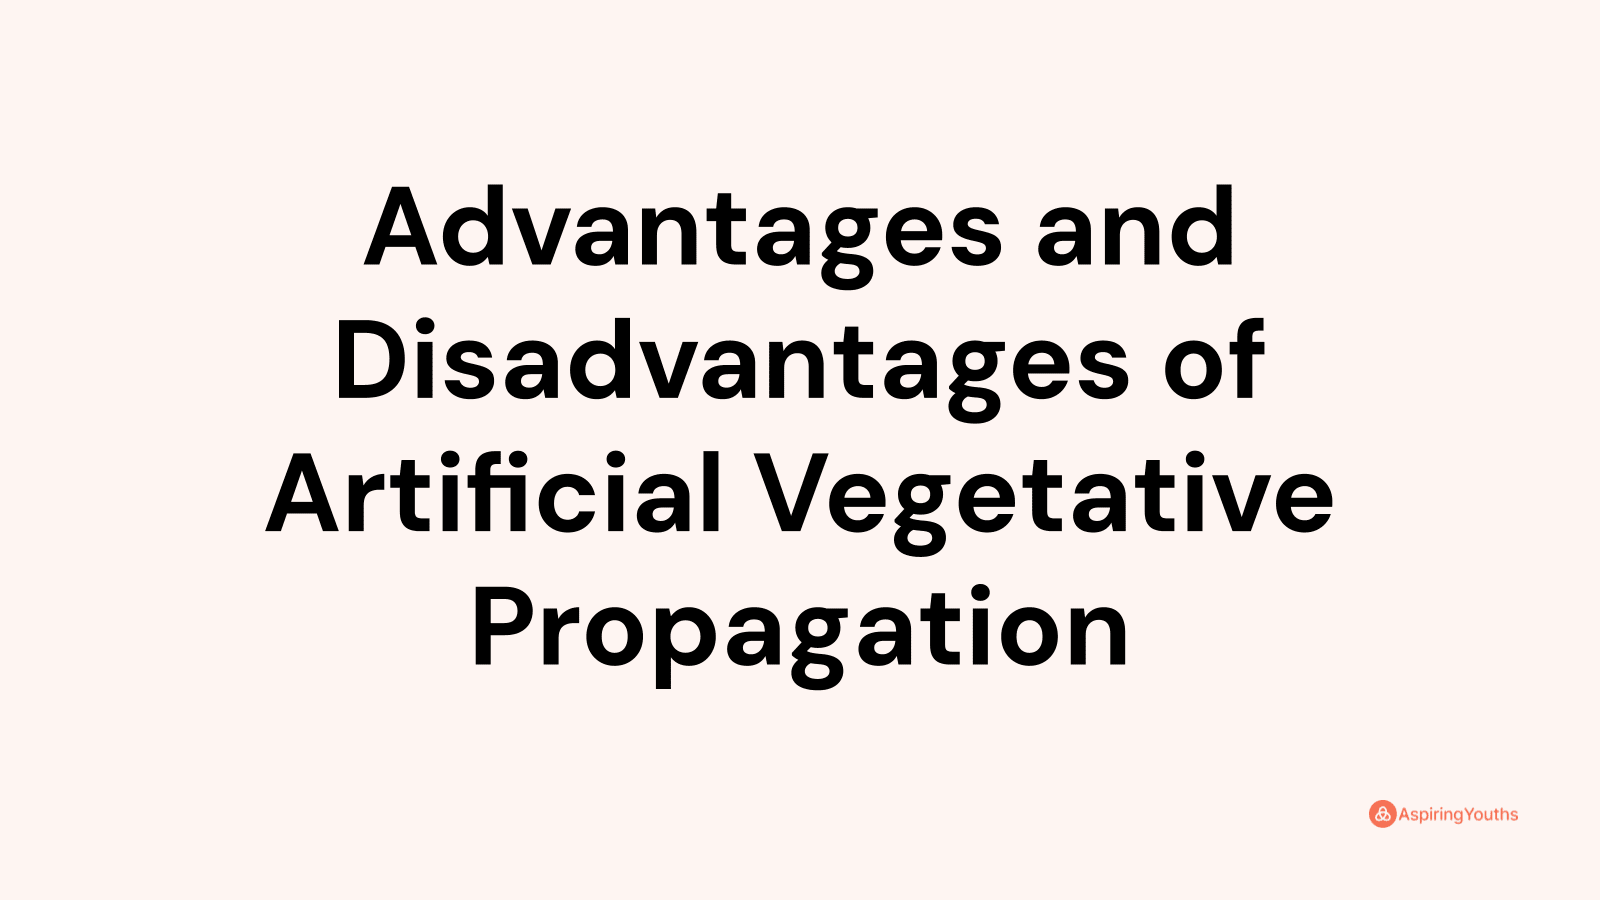 Advantages and disadvantages of Artificial Vegetative Propagation